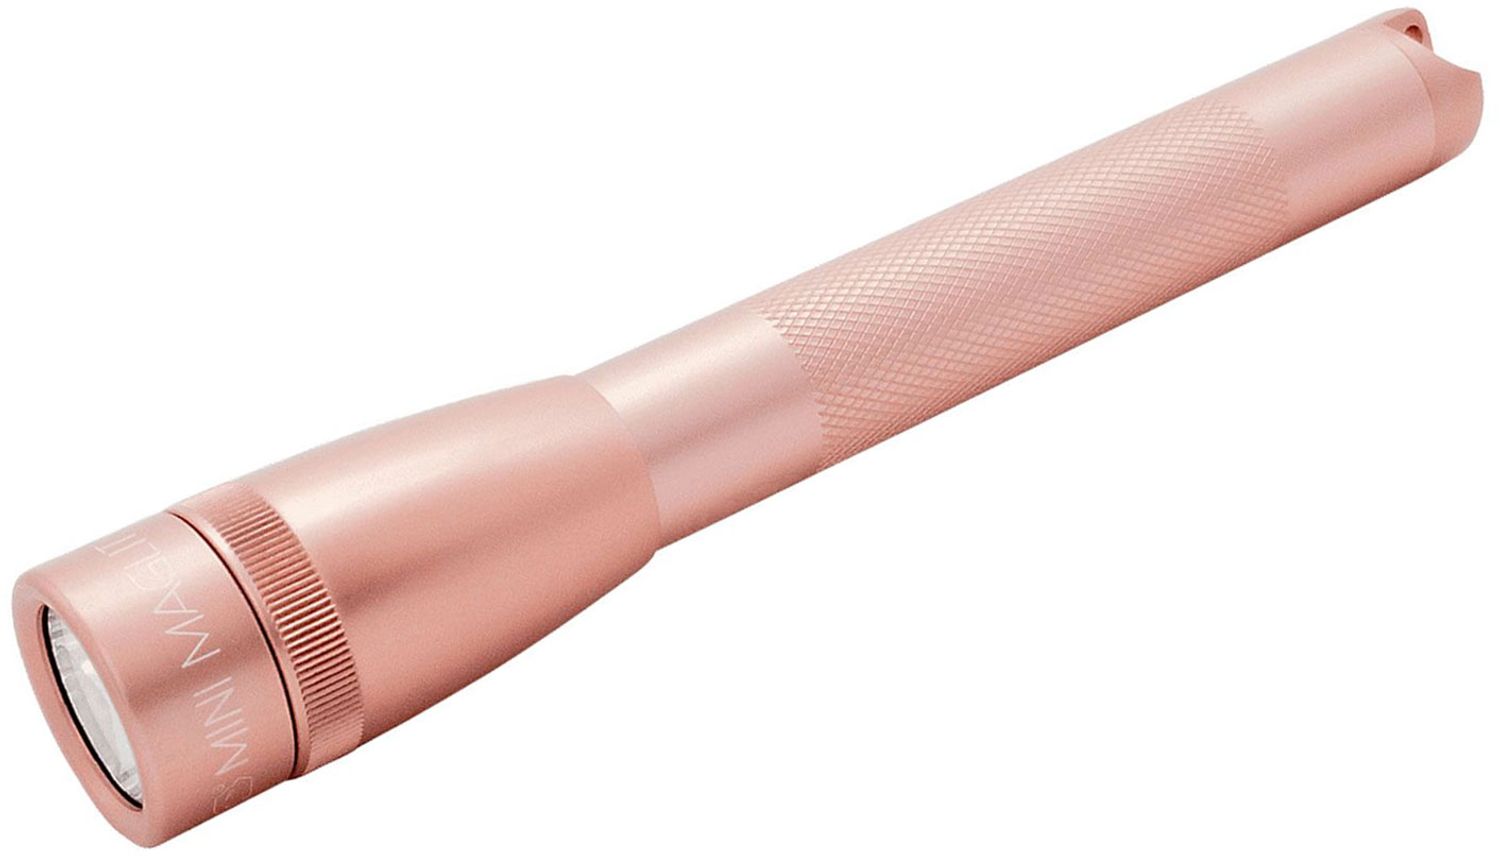 Maglite Pro LED AA Flashlight - Rose Gold Body, Nylon Sheath, 332 Max Lumens - KnifeCenter - SP2PSVH